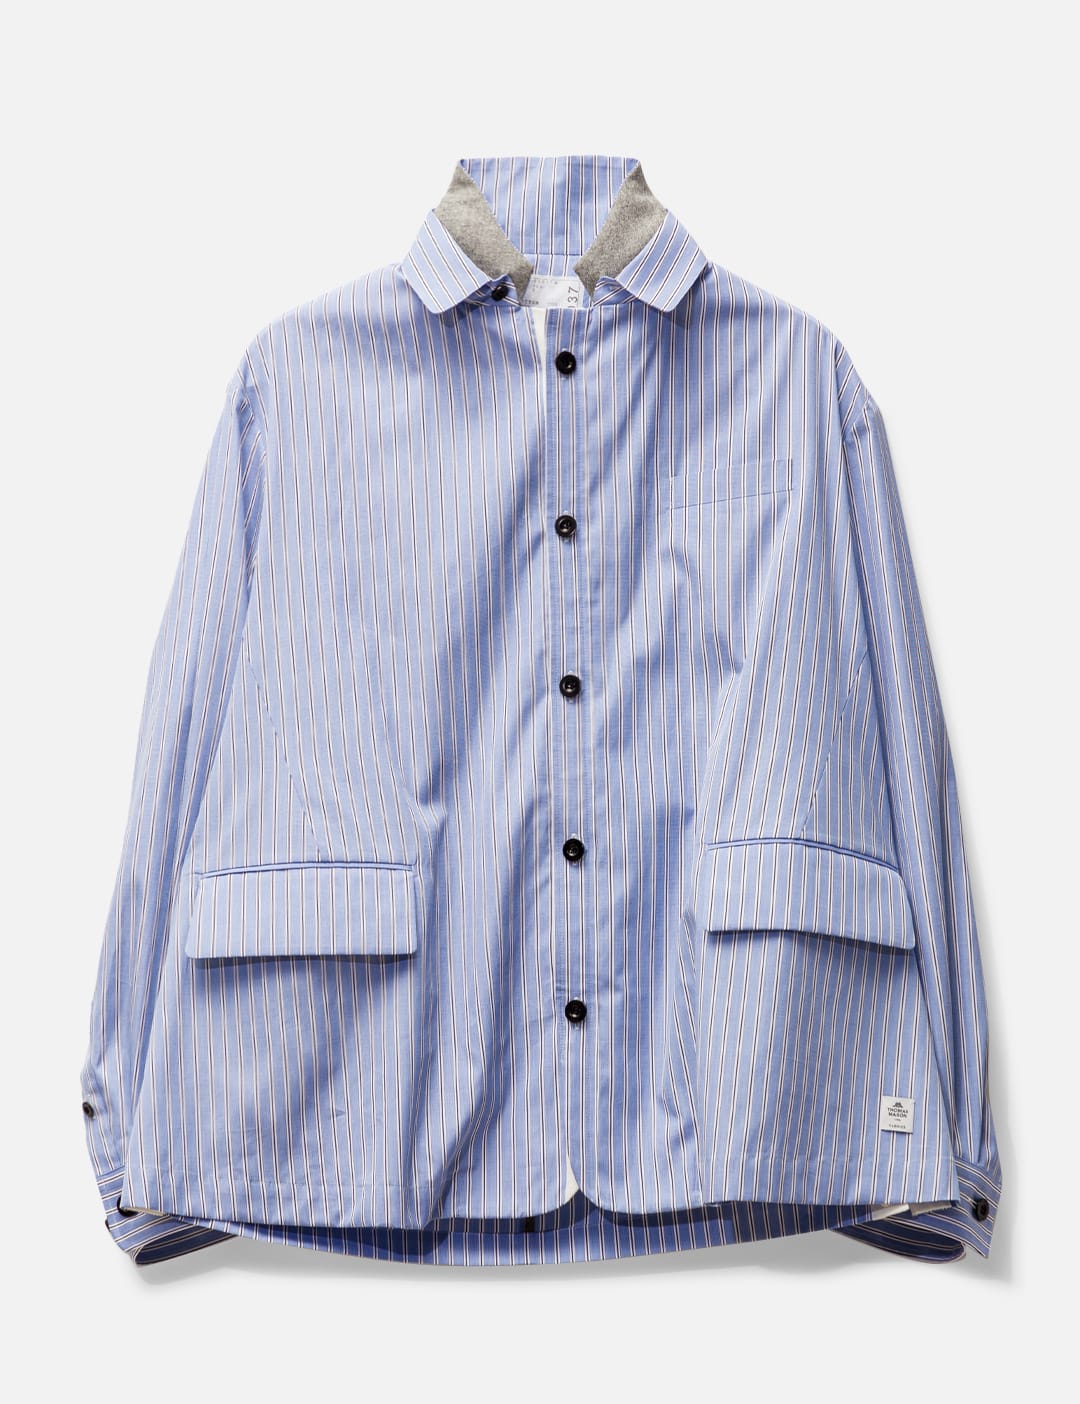 Sacai - Thomas Mason Cotton Poplin Jacket | HBX - Globally Curated Fashion  and Lifestyle by Hypebeast